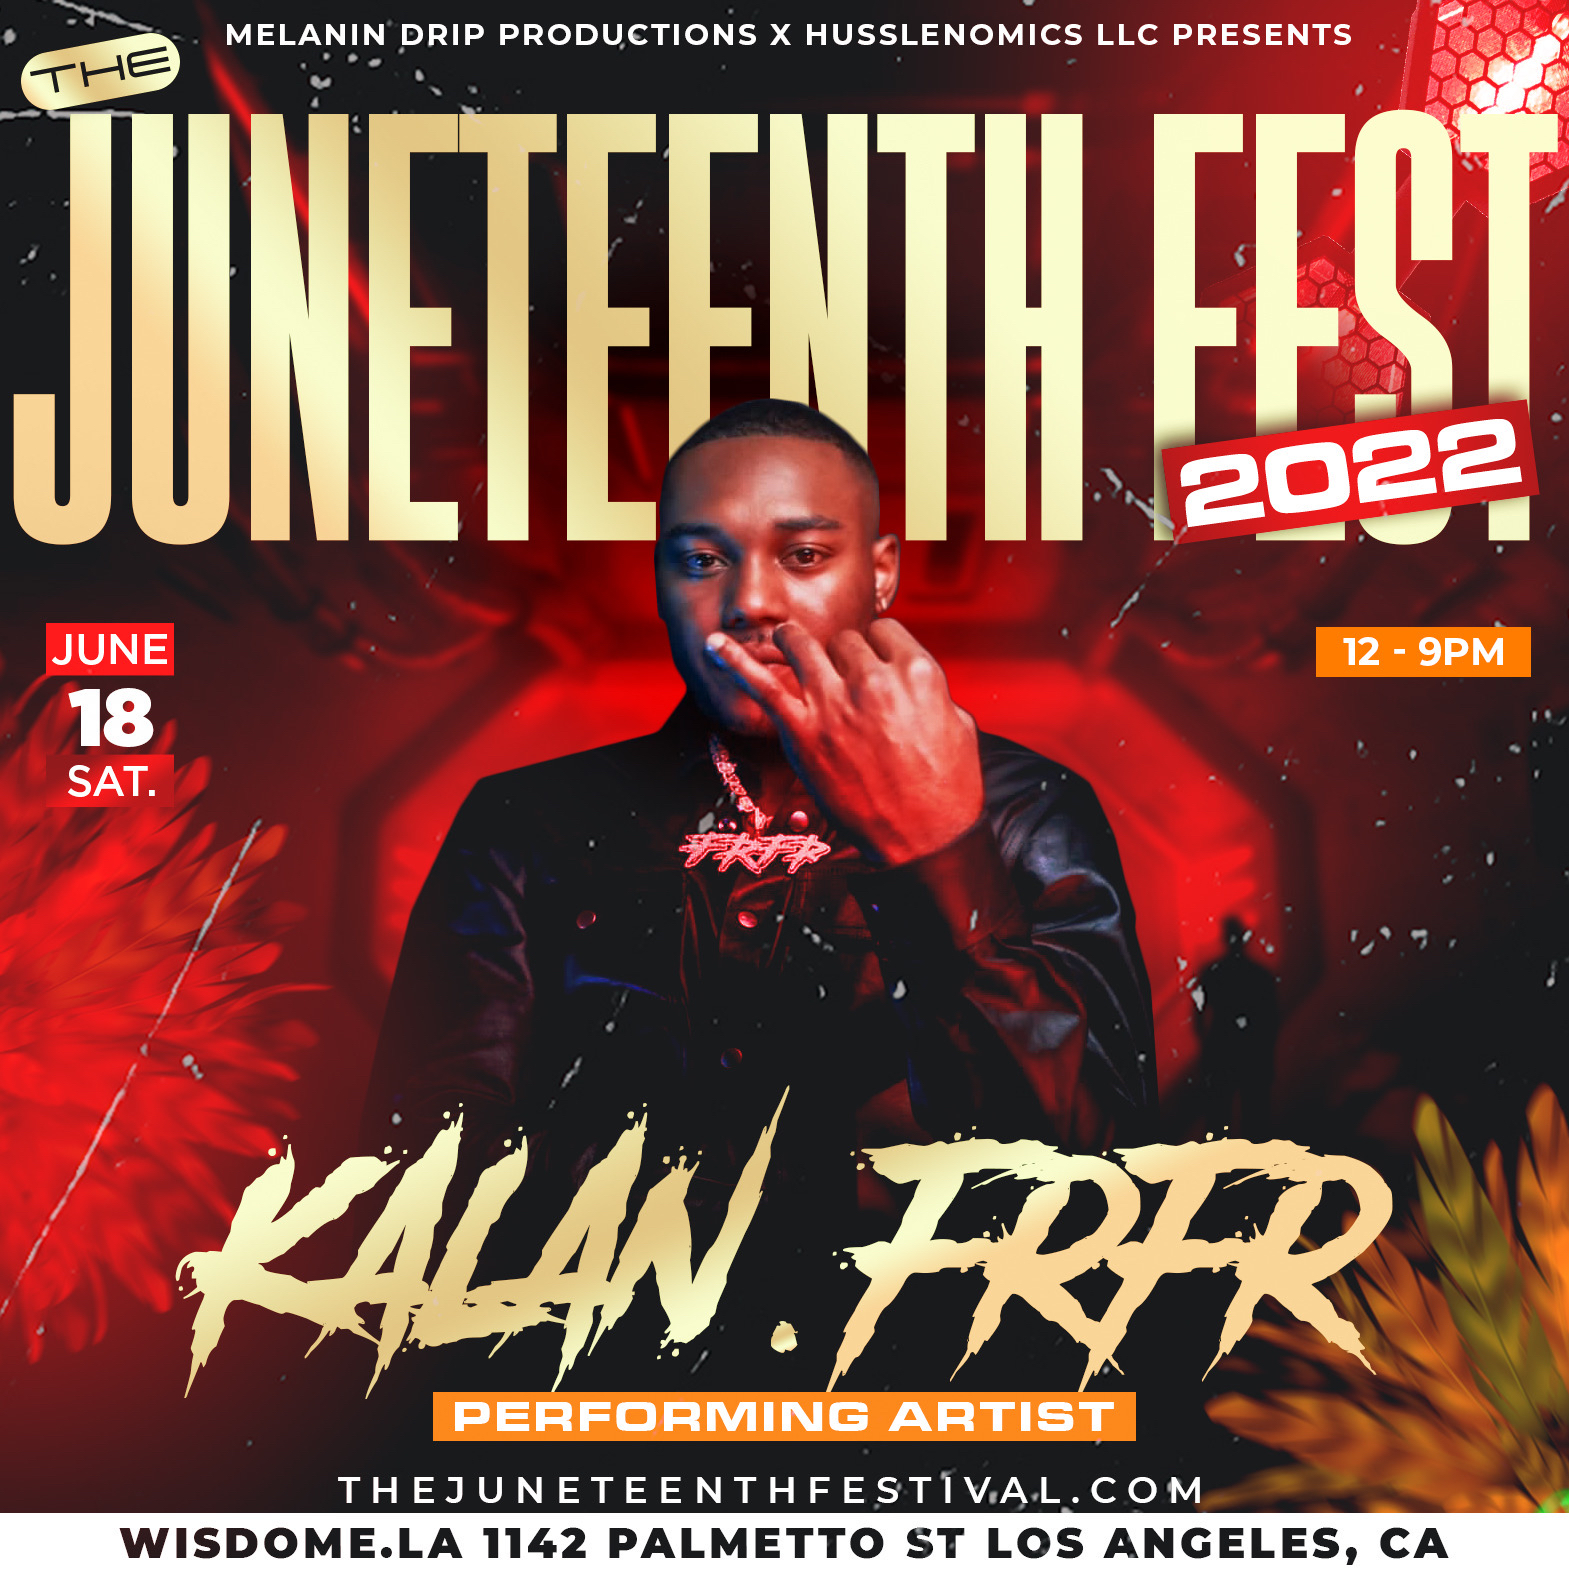 The JuneTeenth Fest